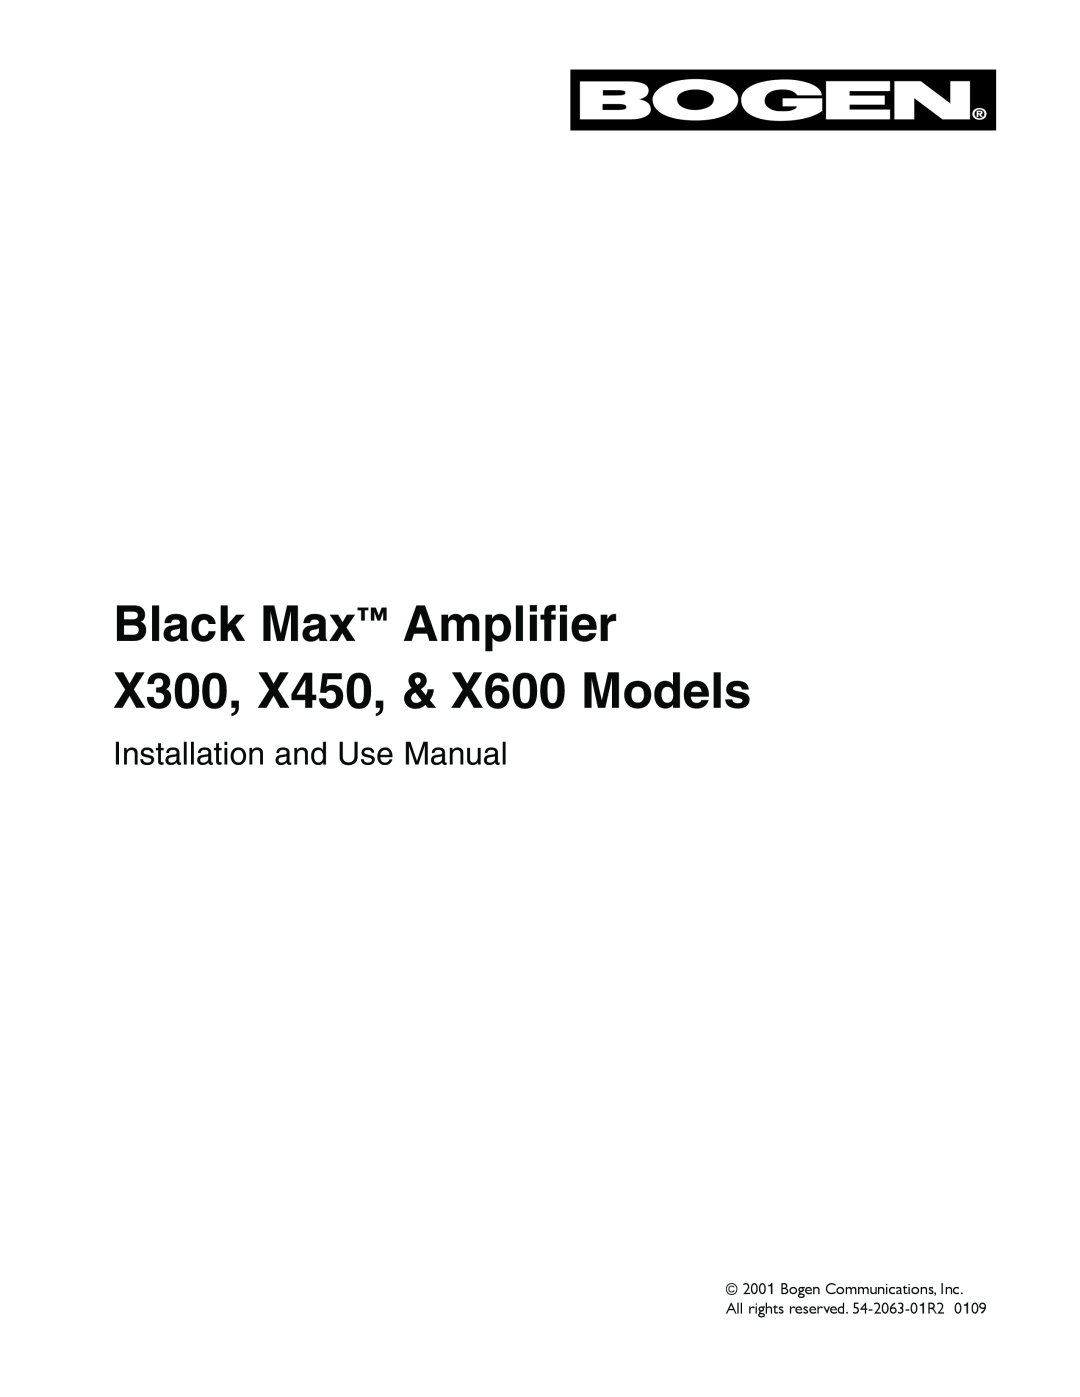 Bogen manual Black Max Amplifier X300, X450, & X600 Models, Installation and Use Manual 